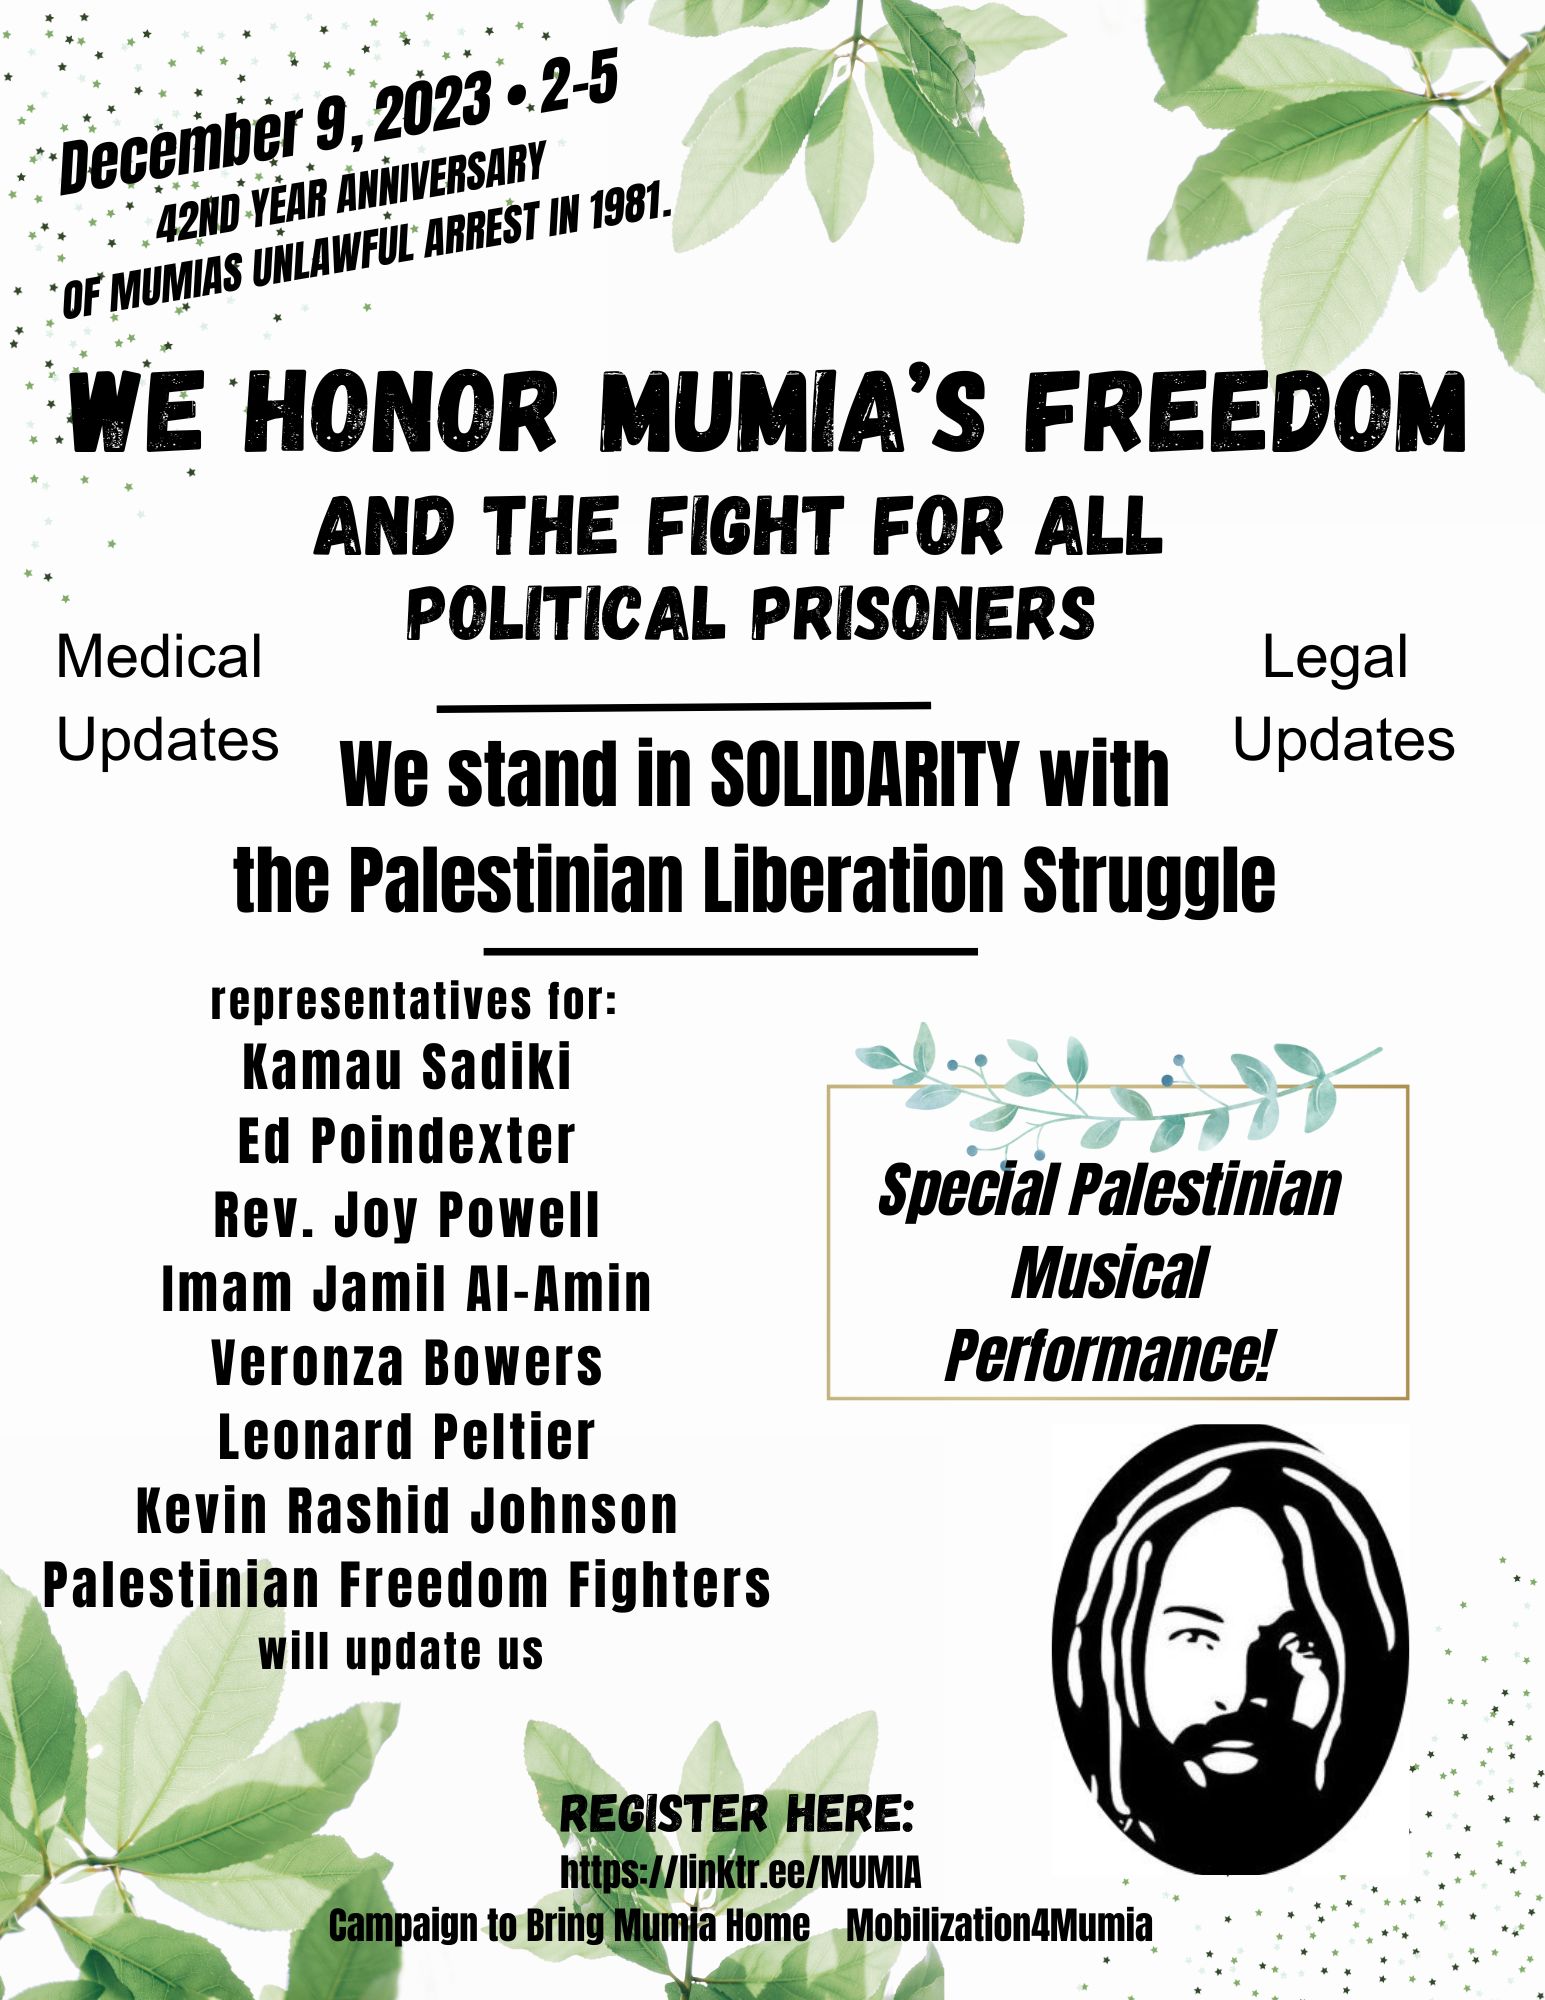 Virtual Program for Mumia Abu-Jamal